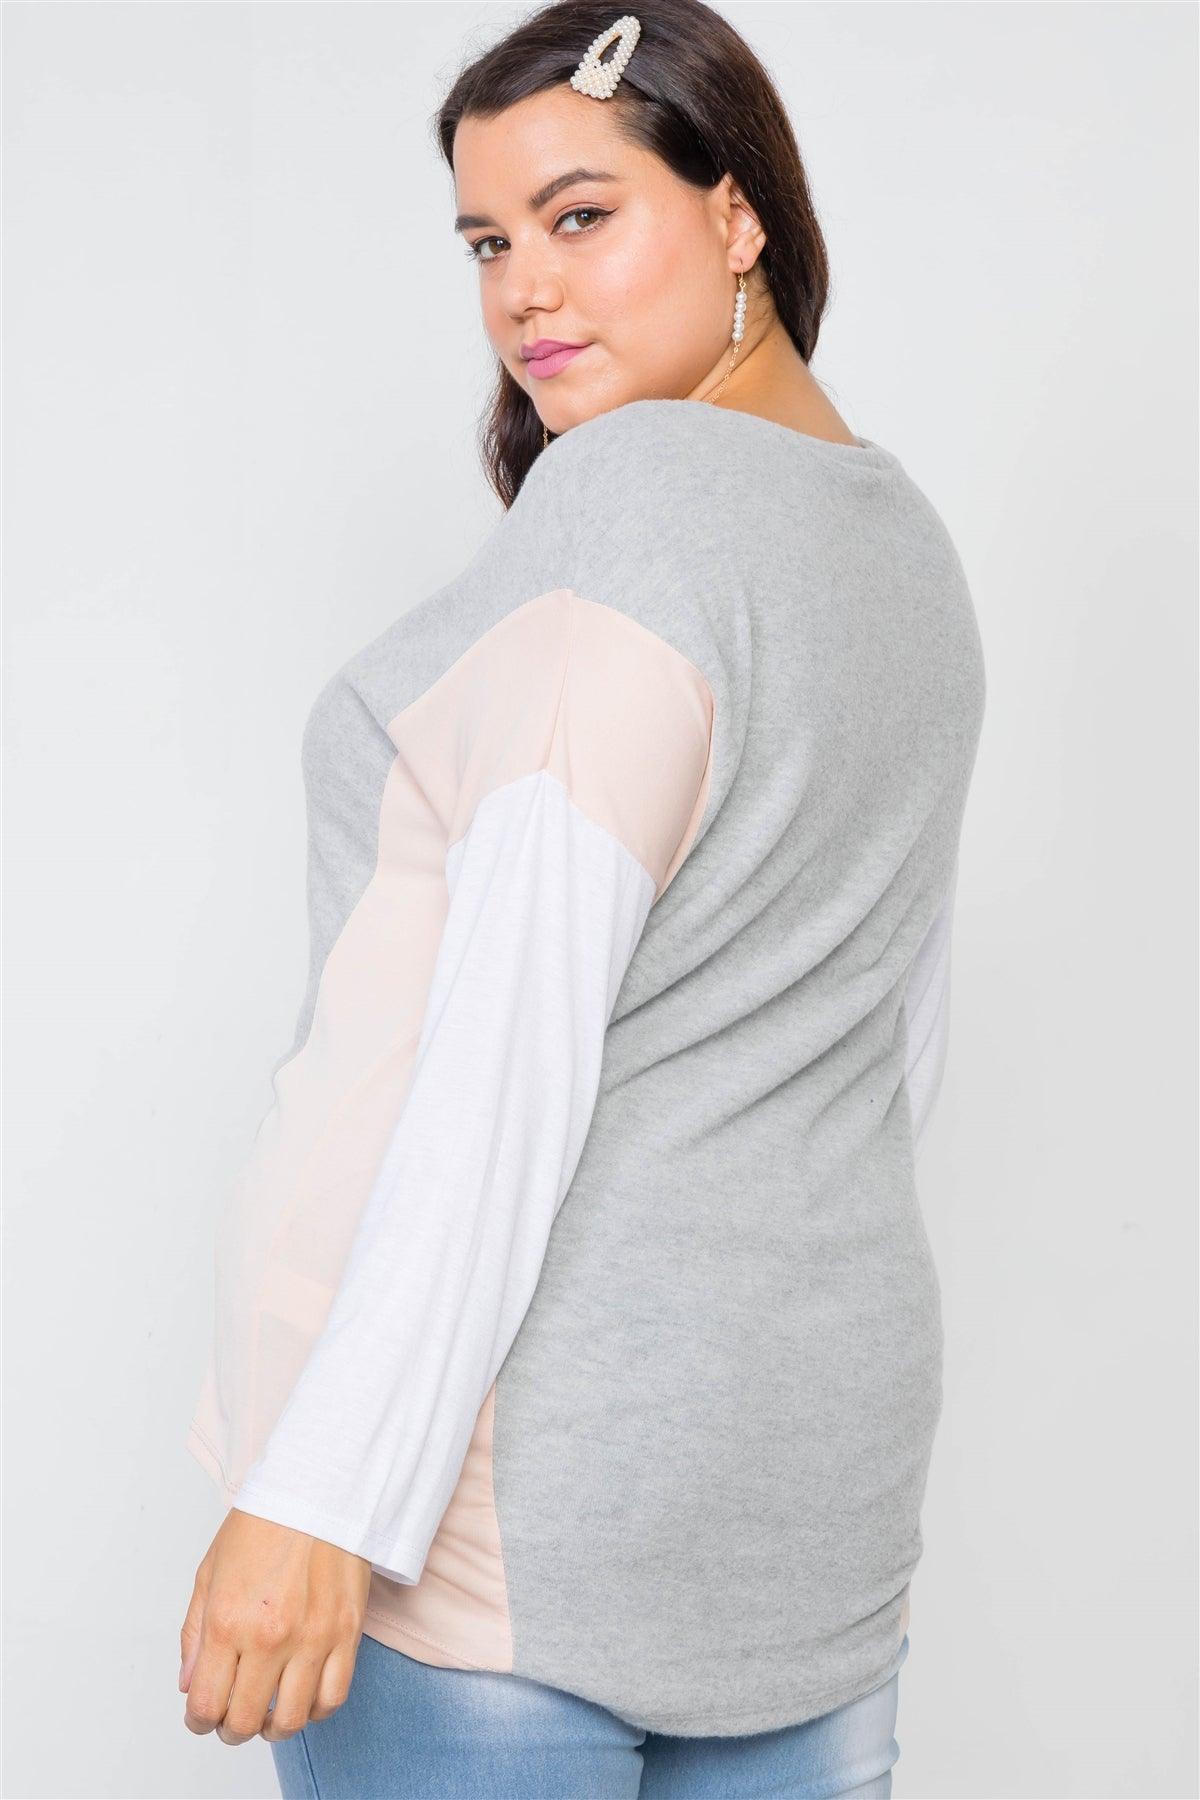 Plus Size Ivory Grey Colorblock Soft Knit Top